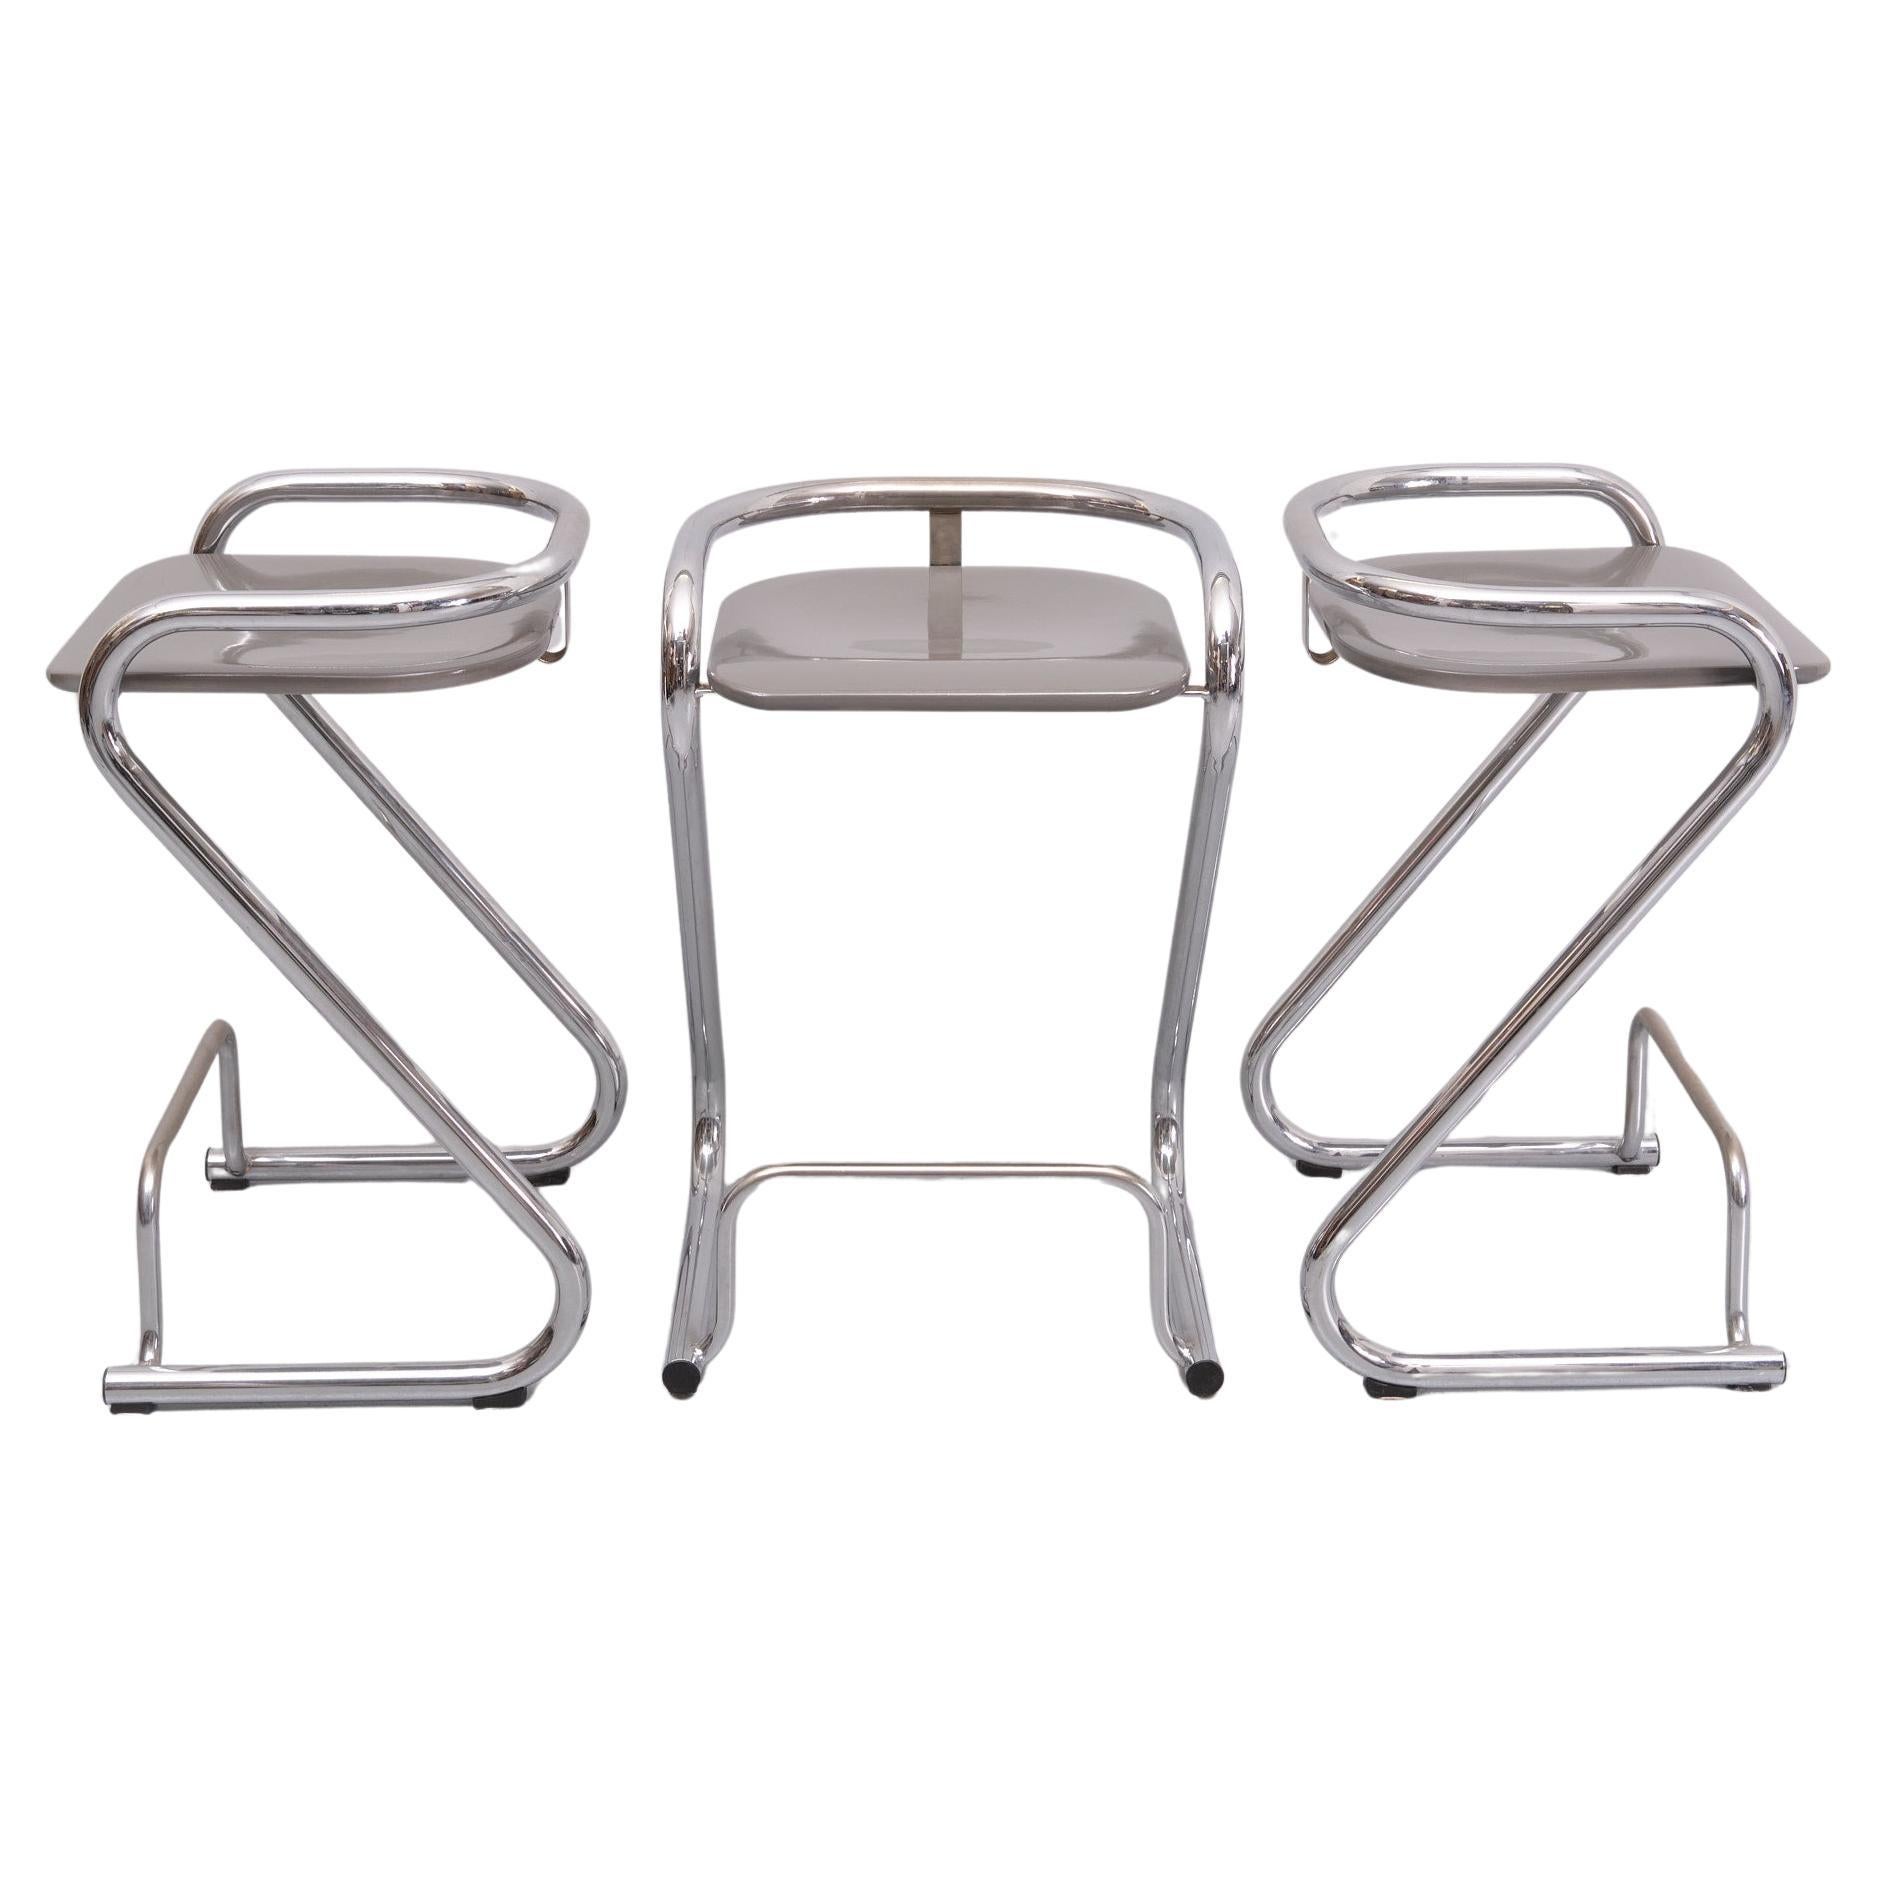 Chrome Set of 3 Bar stools S70-3 by Borge Lindau & Bo Lindekrantz for Lammhults  1960  For Sale